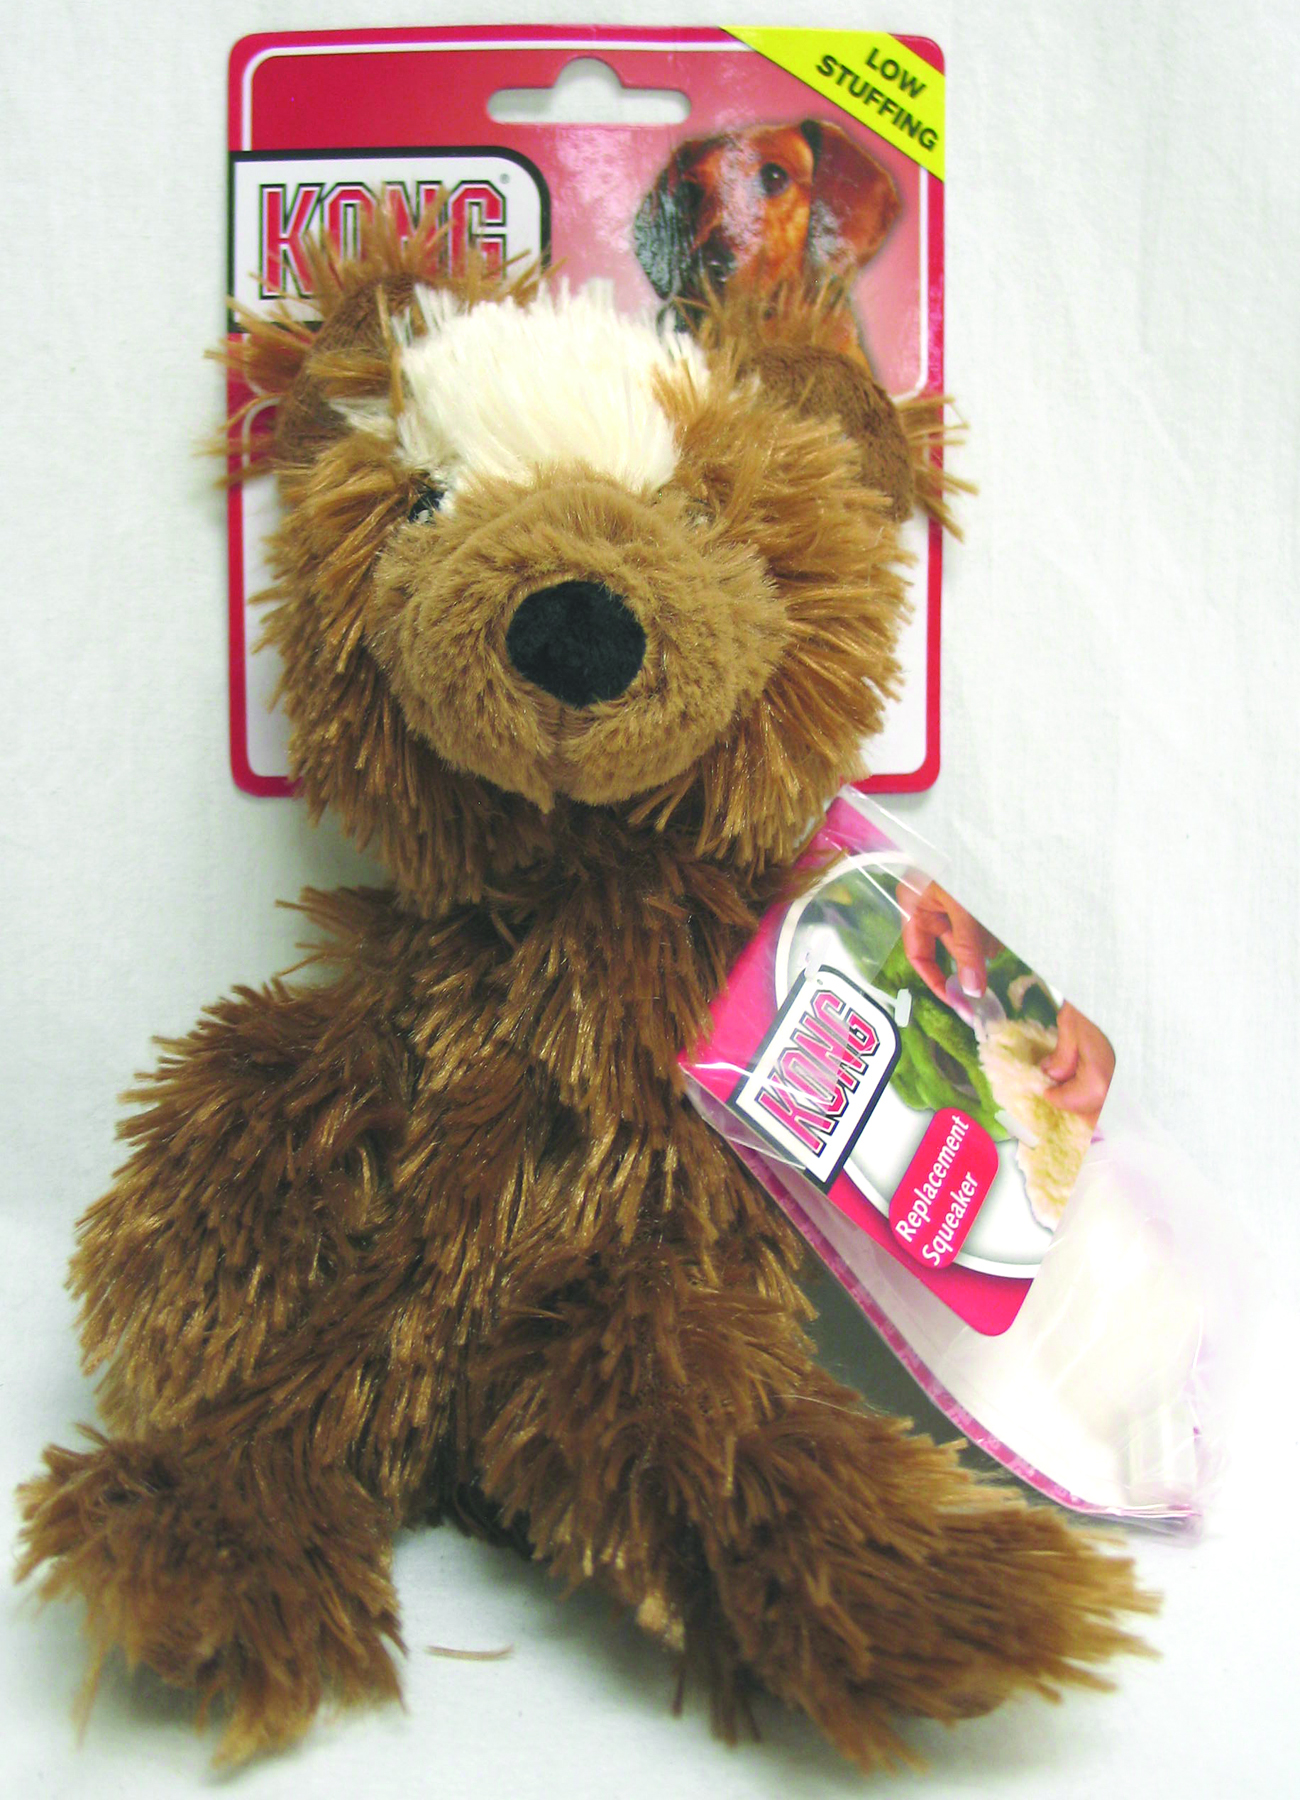 Dr Noys teddy bear - medium plush dog toy